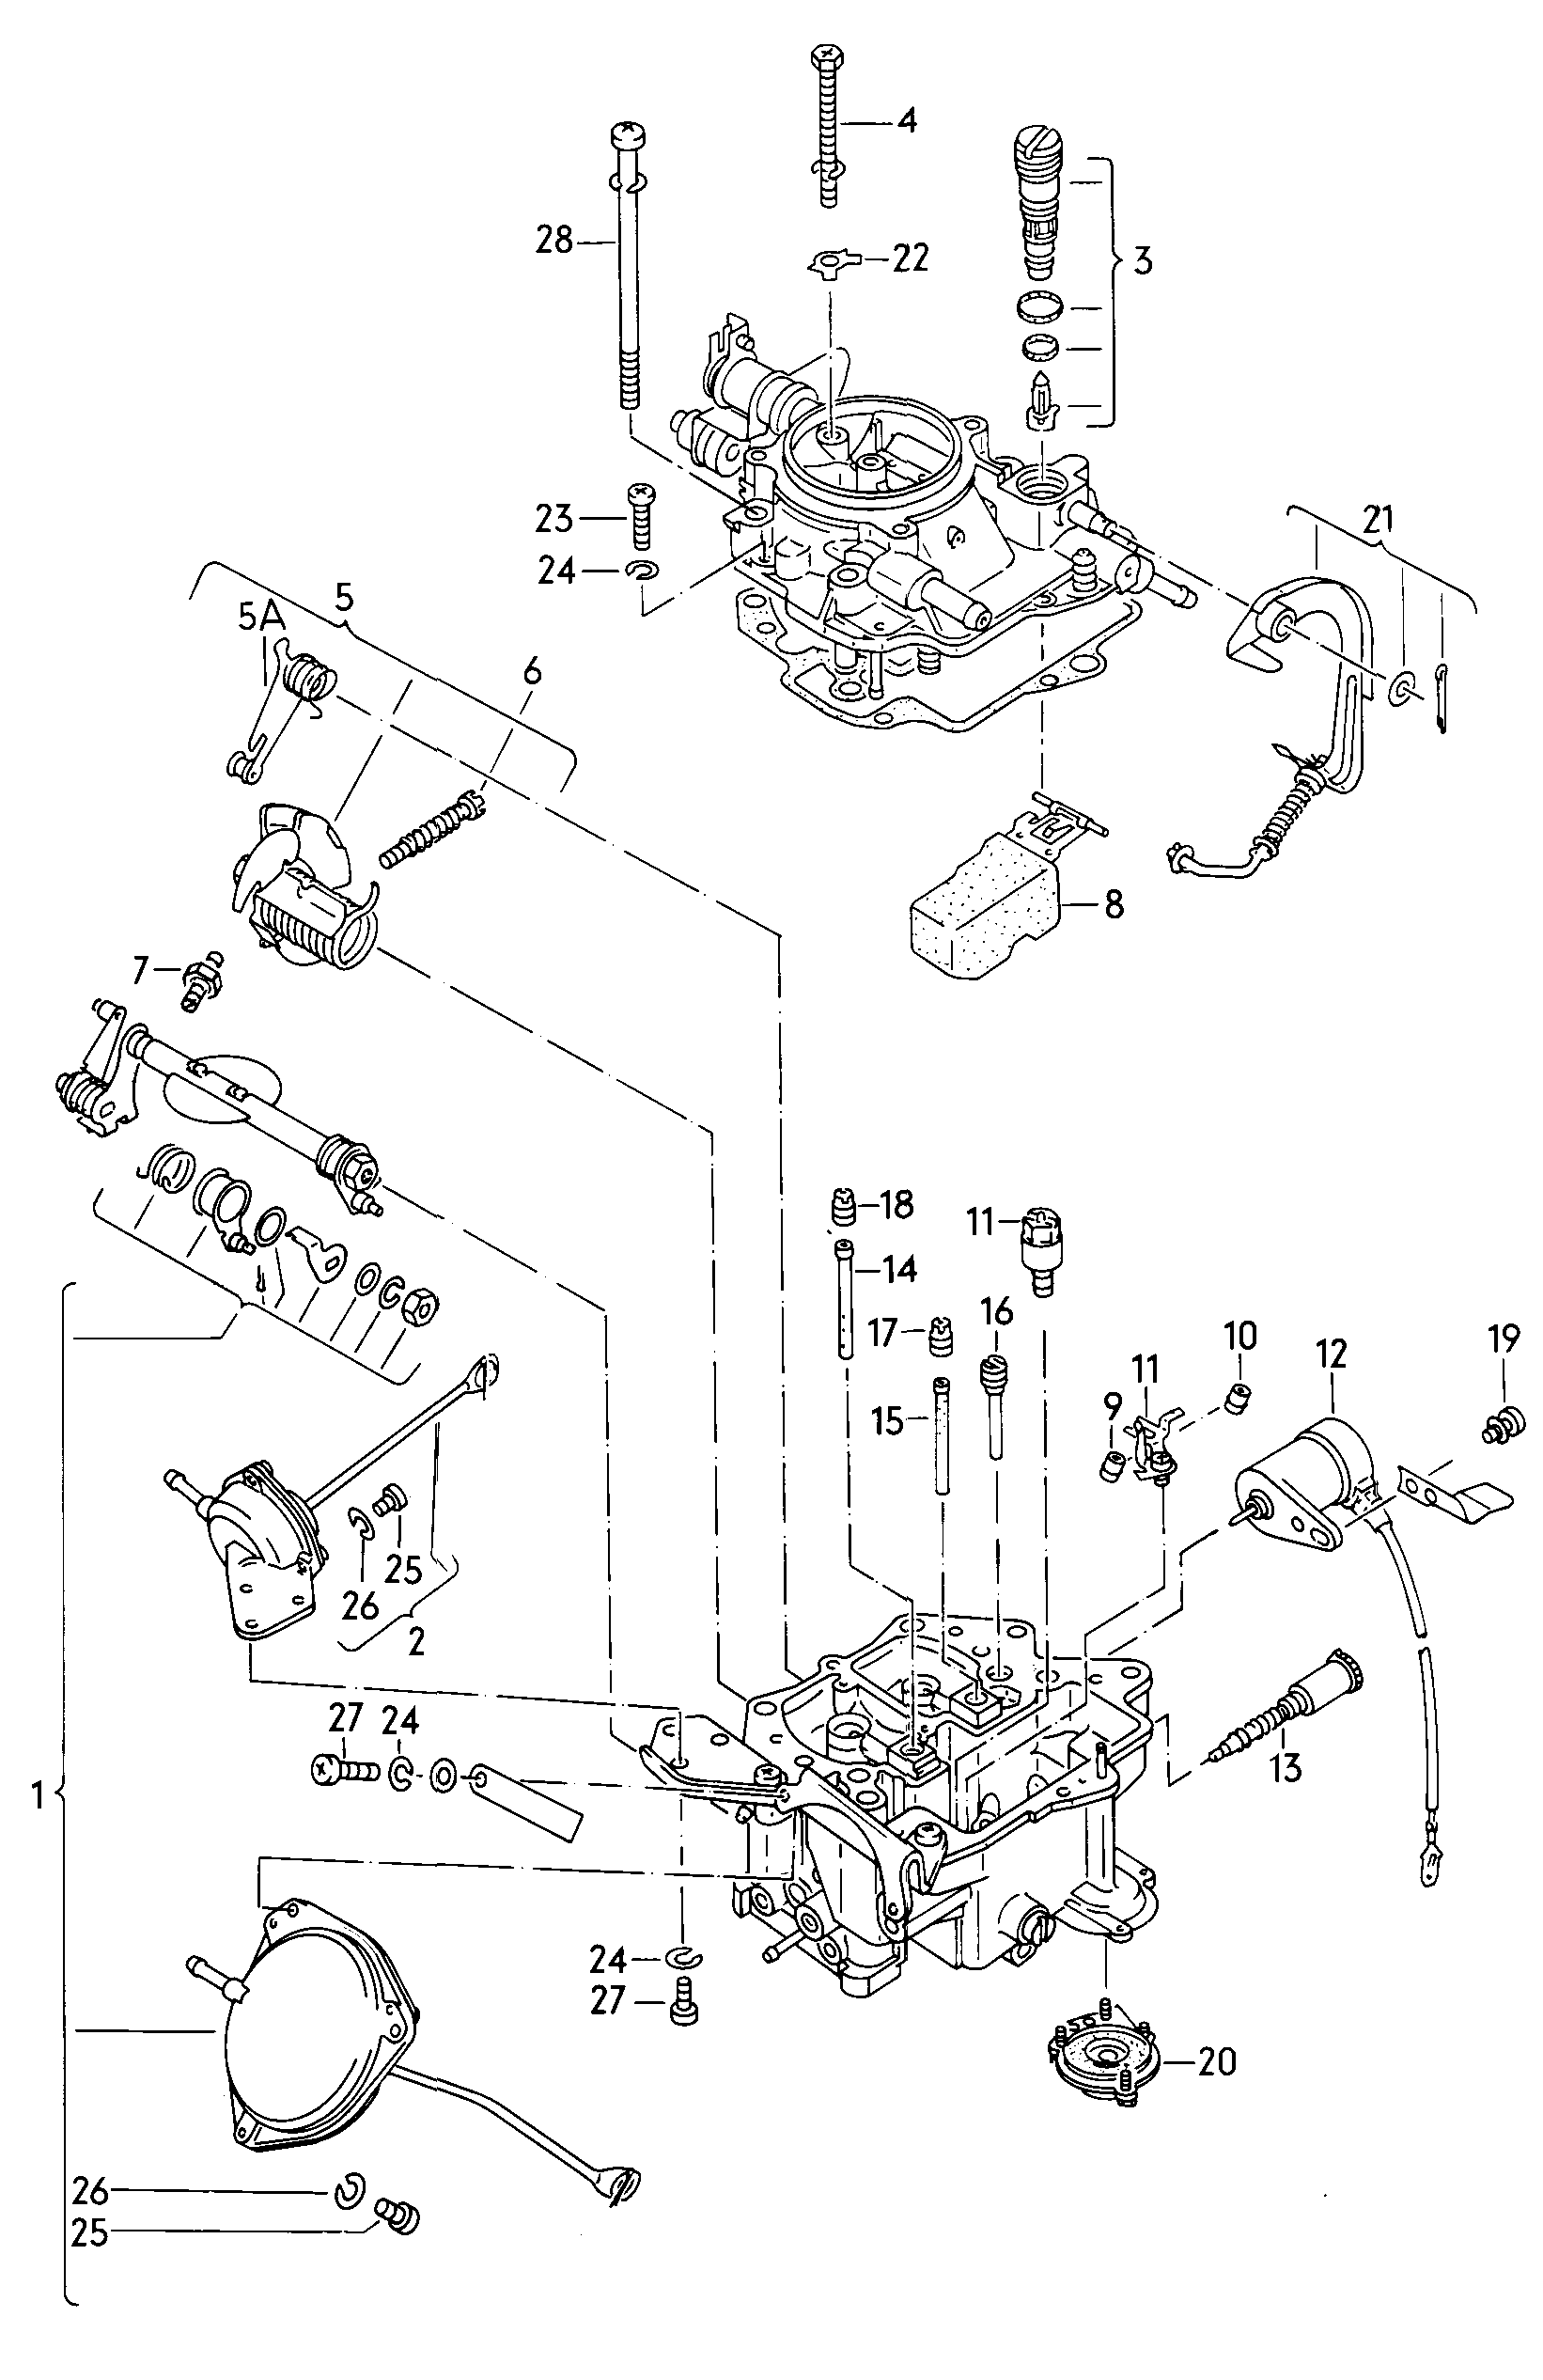 Carburateurp. vehicules reequipes dun<br>systeme depuration des gaz a<br>regulation lambda 2 E E - Audi 80/90/Avant - a80